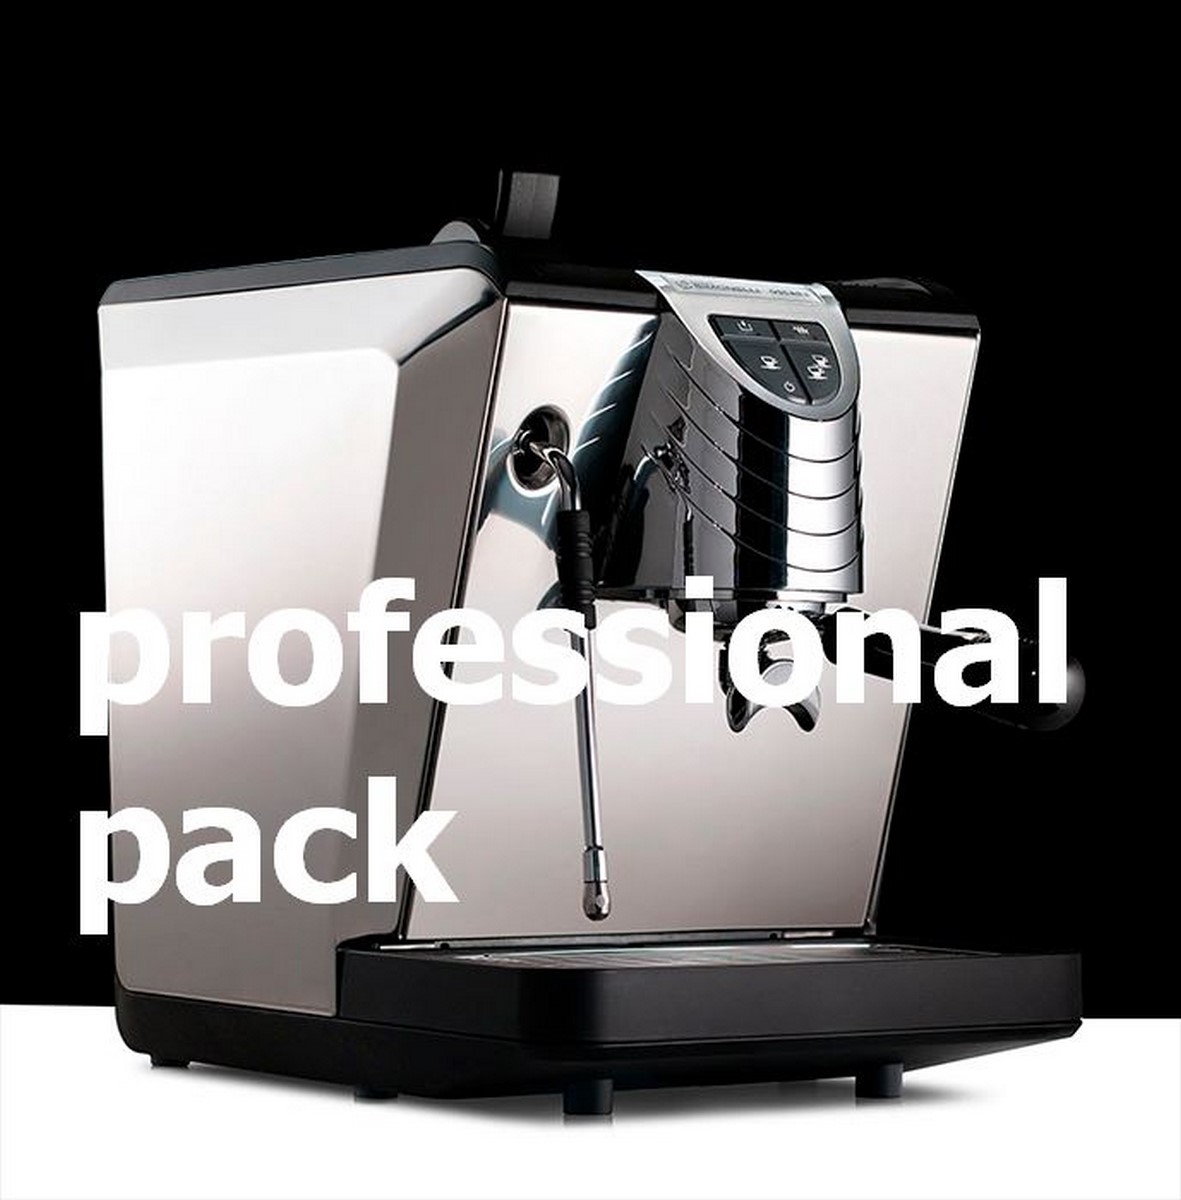 OSCAR 22 PROFESSIONAL PACK BLACK NEW VERSION Coffee Machine NUOVA SIMONELLI  